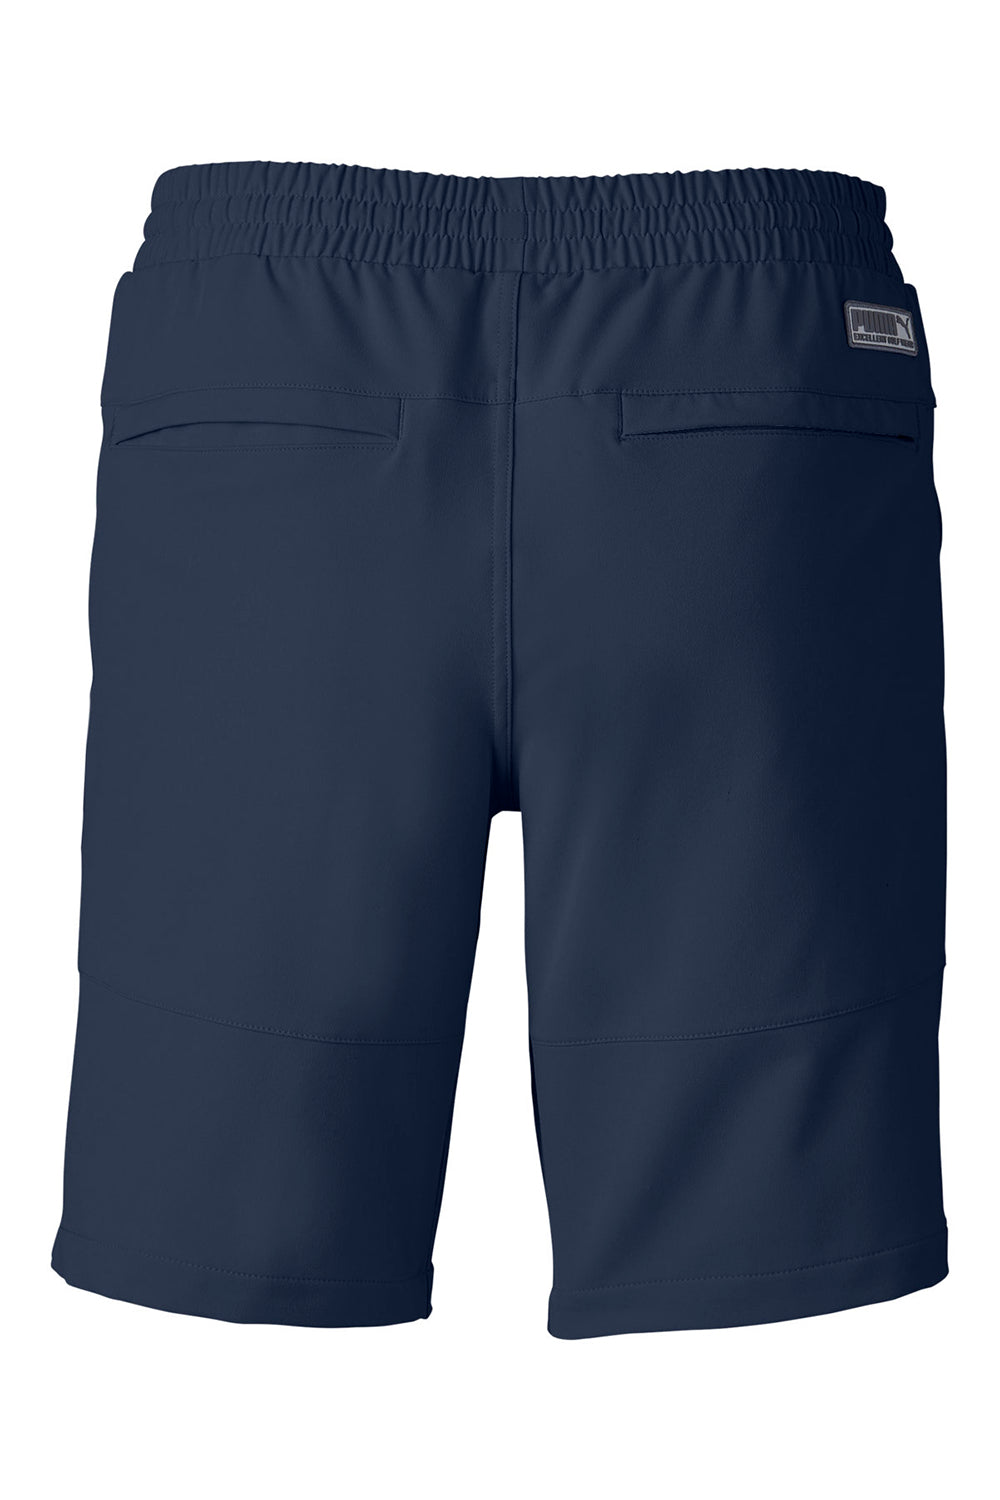 Puma 599271 Mens EGW Walker Shorts w/ Pockets Navy Blue Flat Back